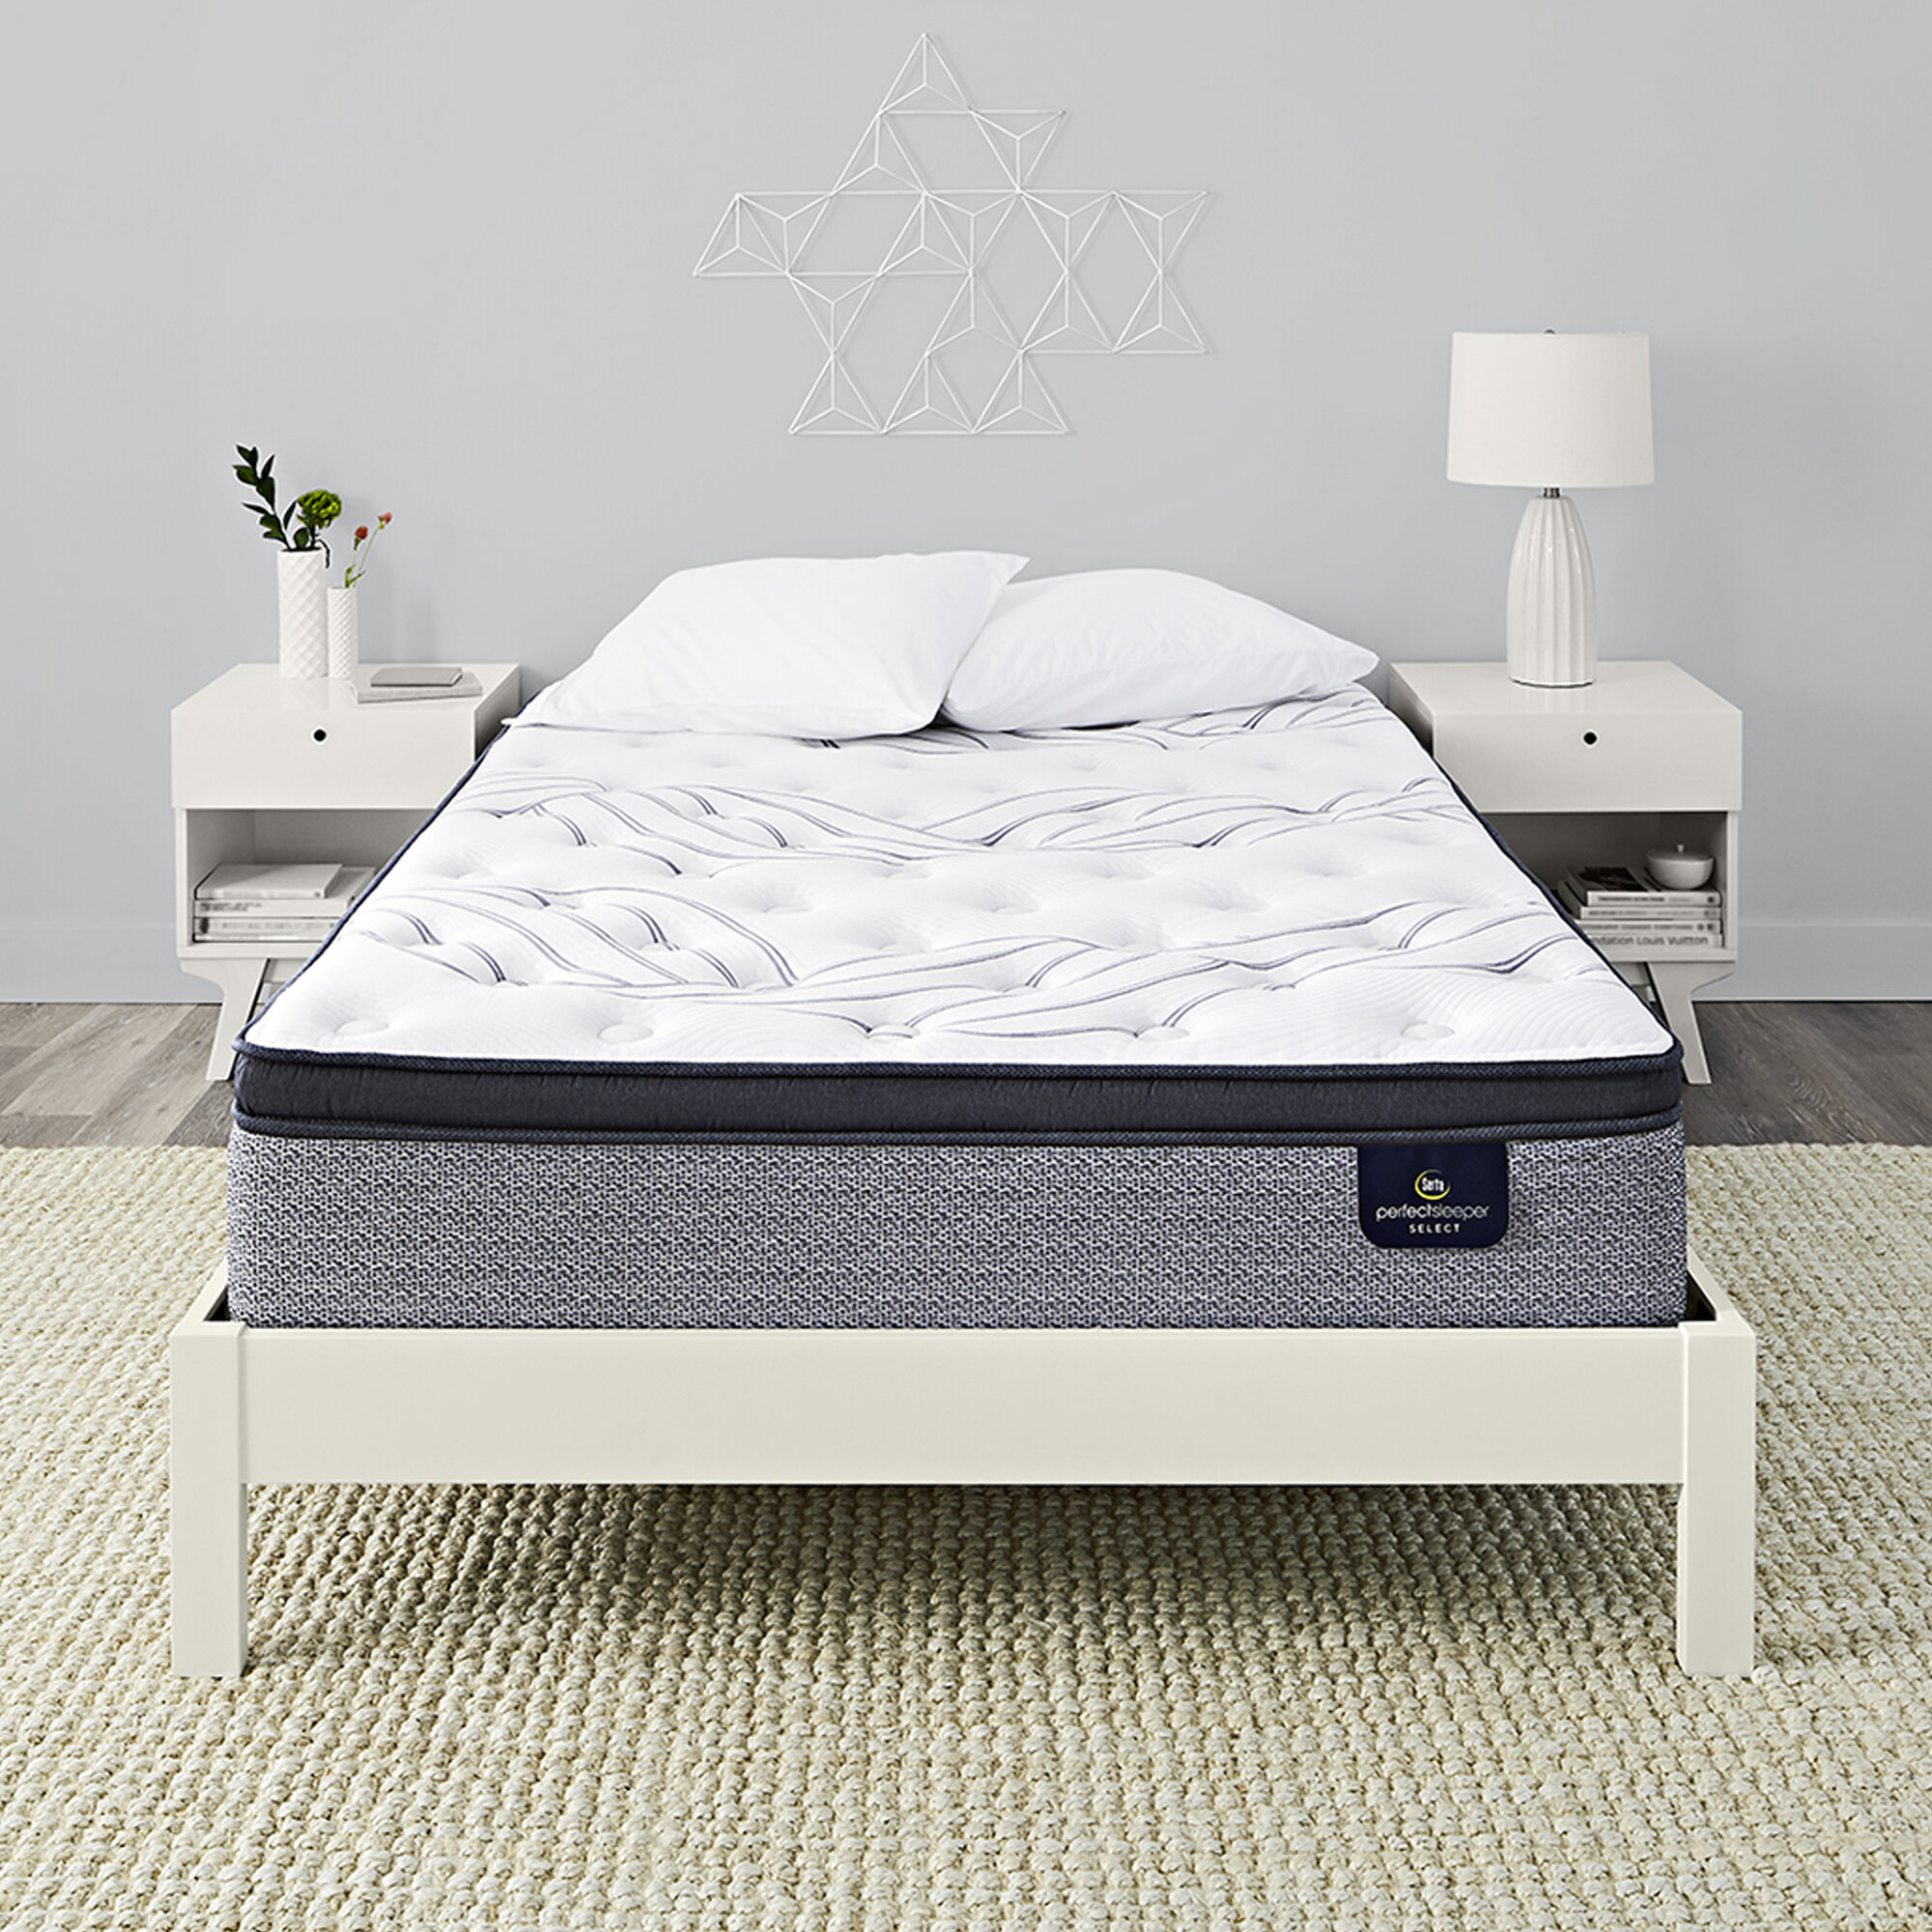 Serta Perfect Sleeper 13 75 Plush Pillow Top Hybrid Mattress And Box Spring Set Reviews Wayfair